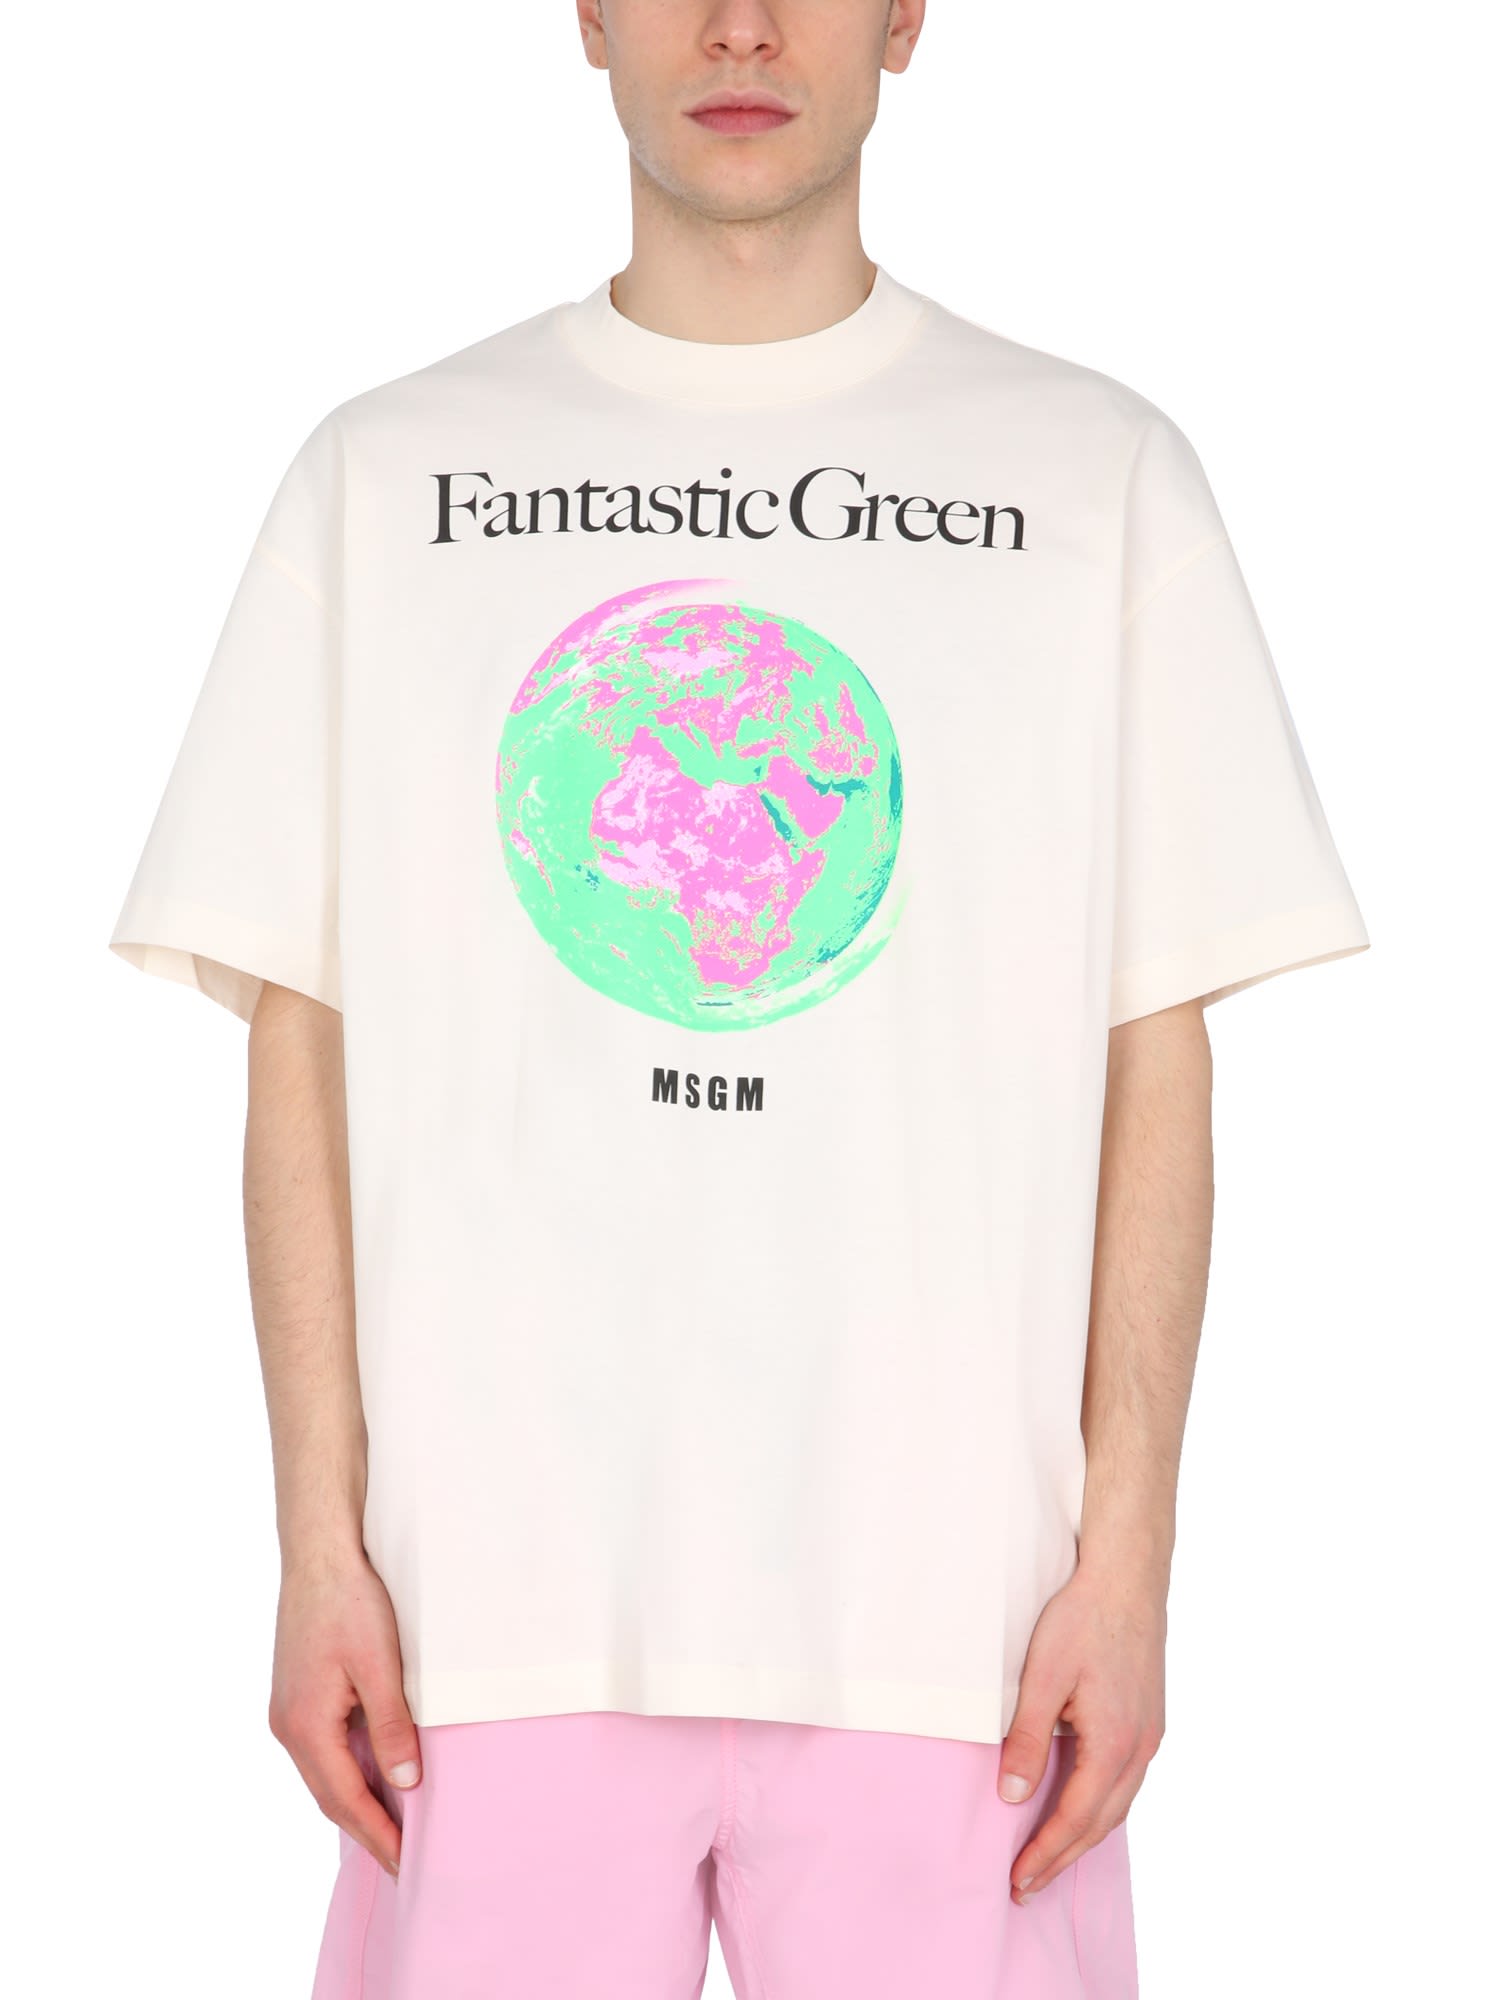 MSGM T-shirt With Fantastic Green Print